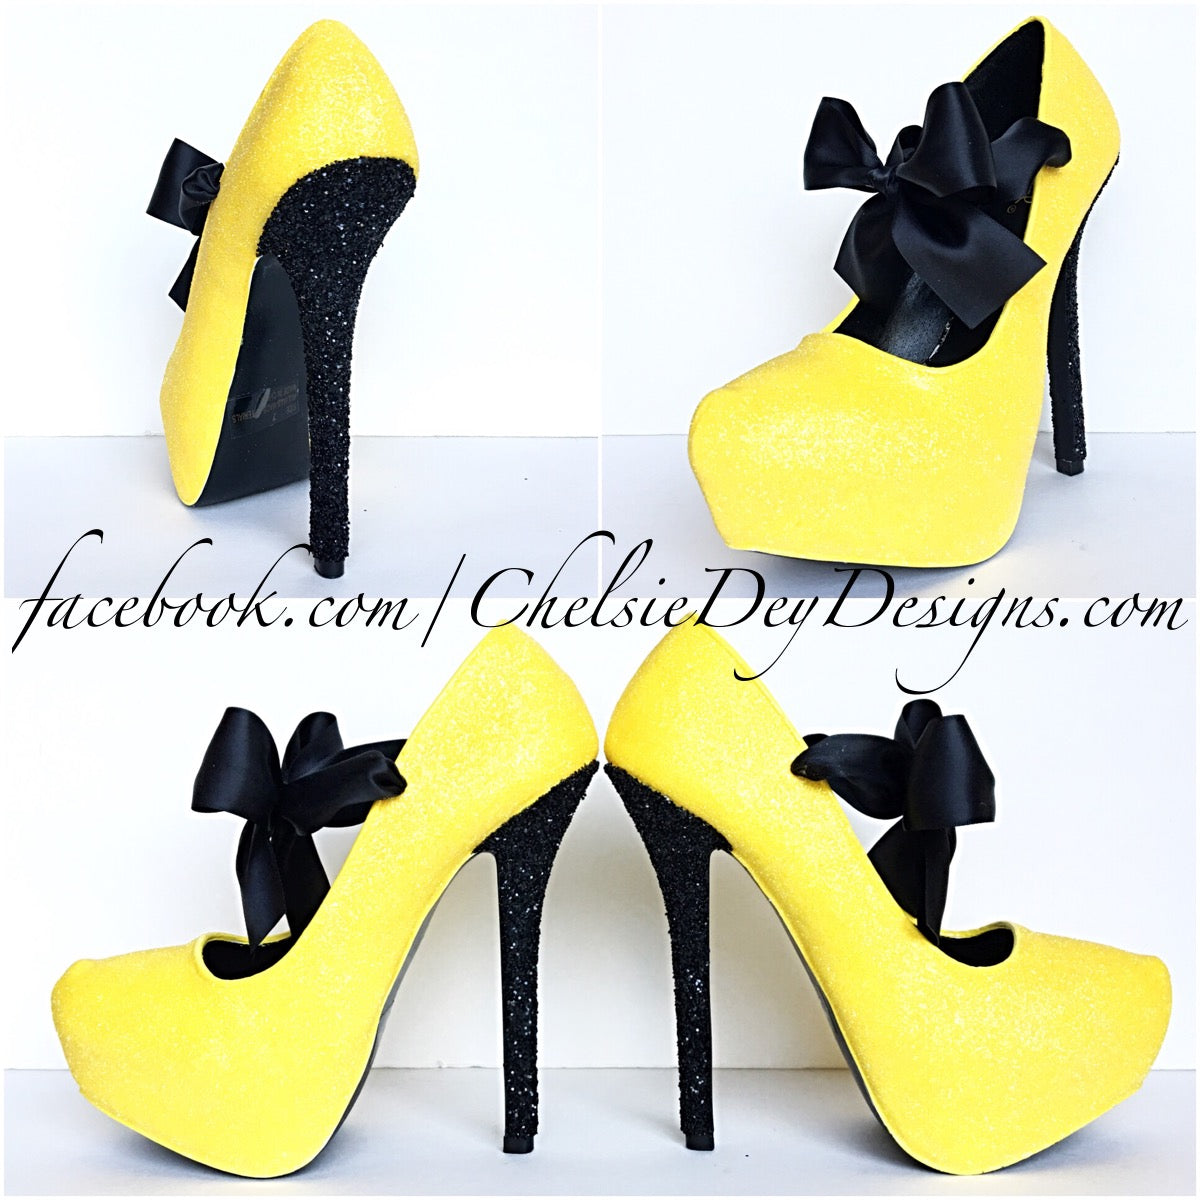 yellow glitter heels